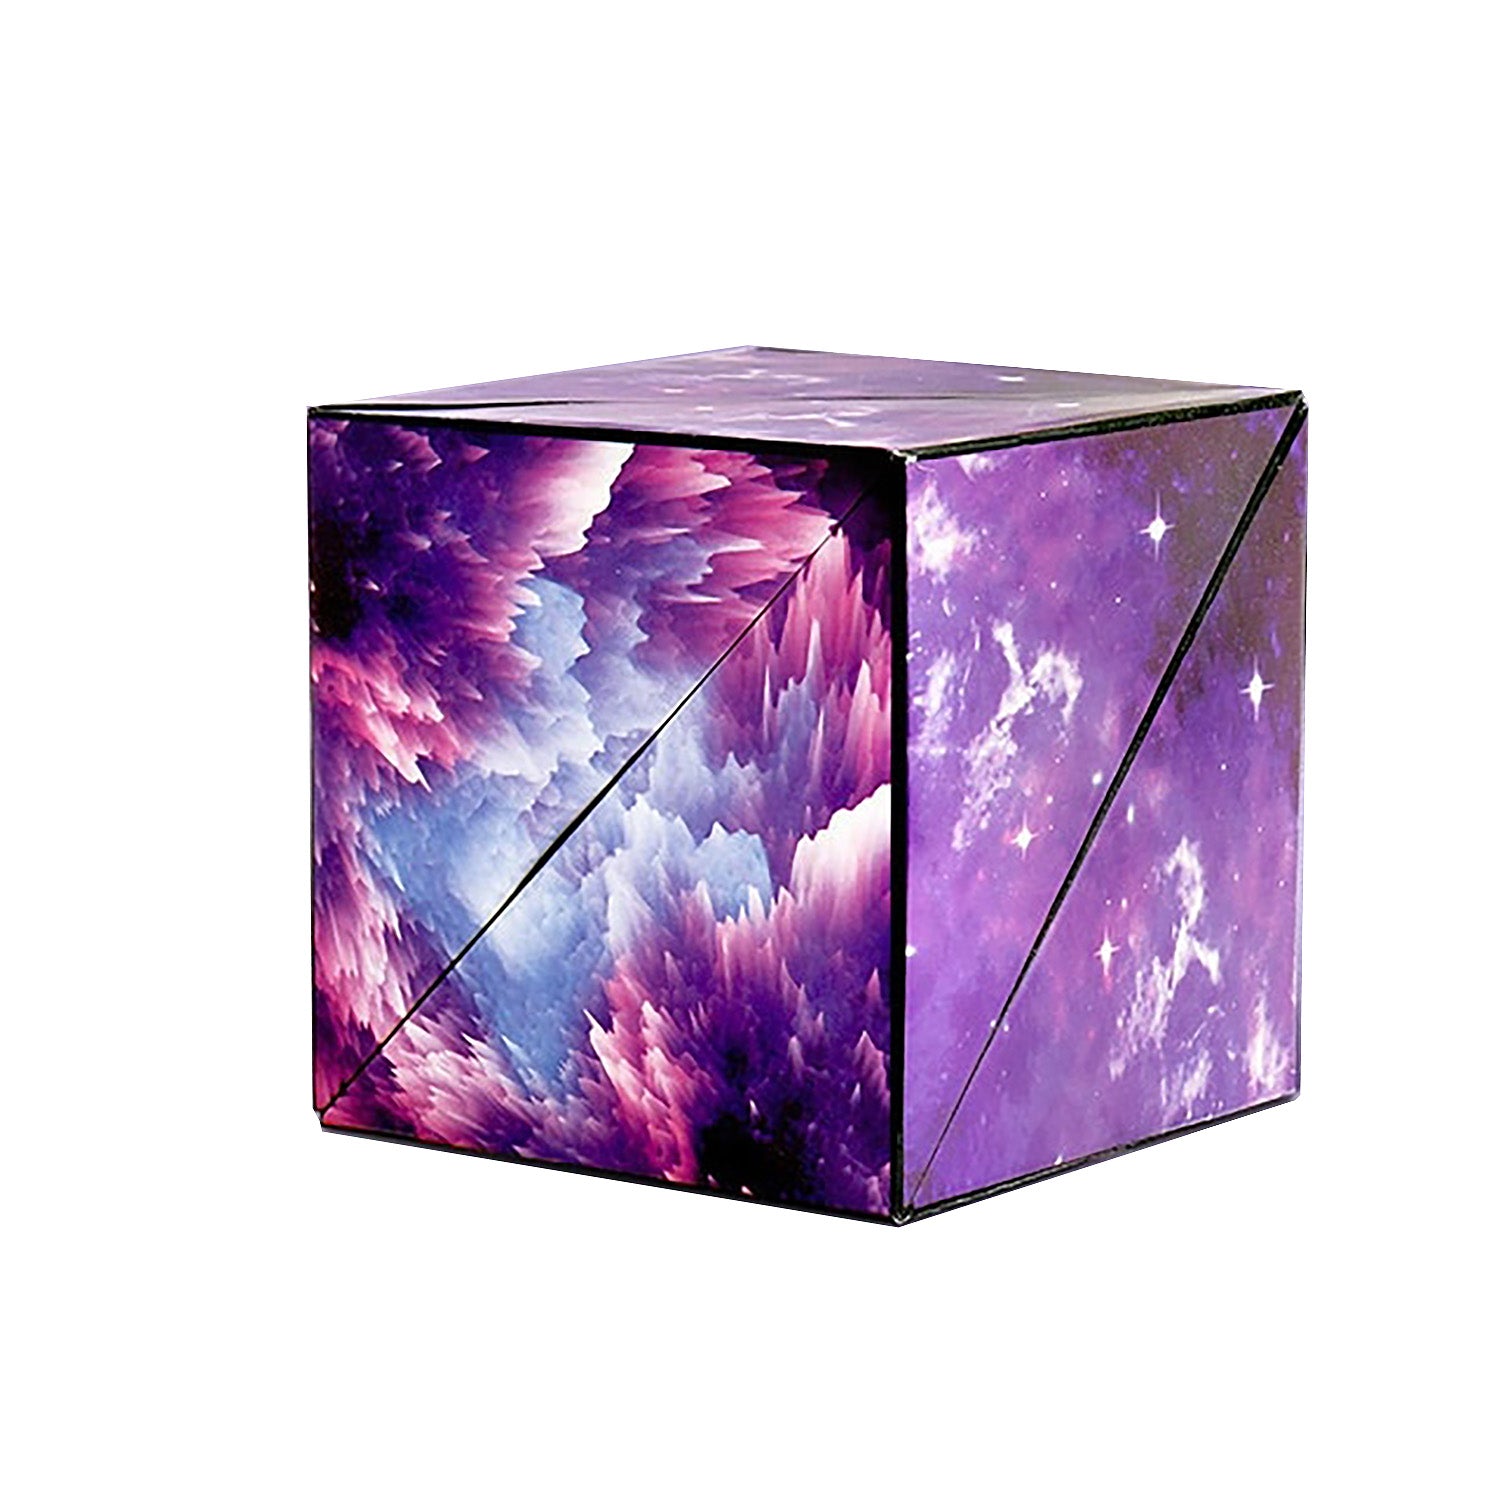 3D Changeable Magnetic Magic Cube, Shape Shifting Box Fidget Toy (Galactic Purple Version)